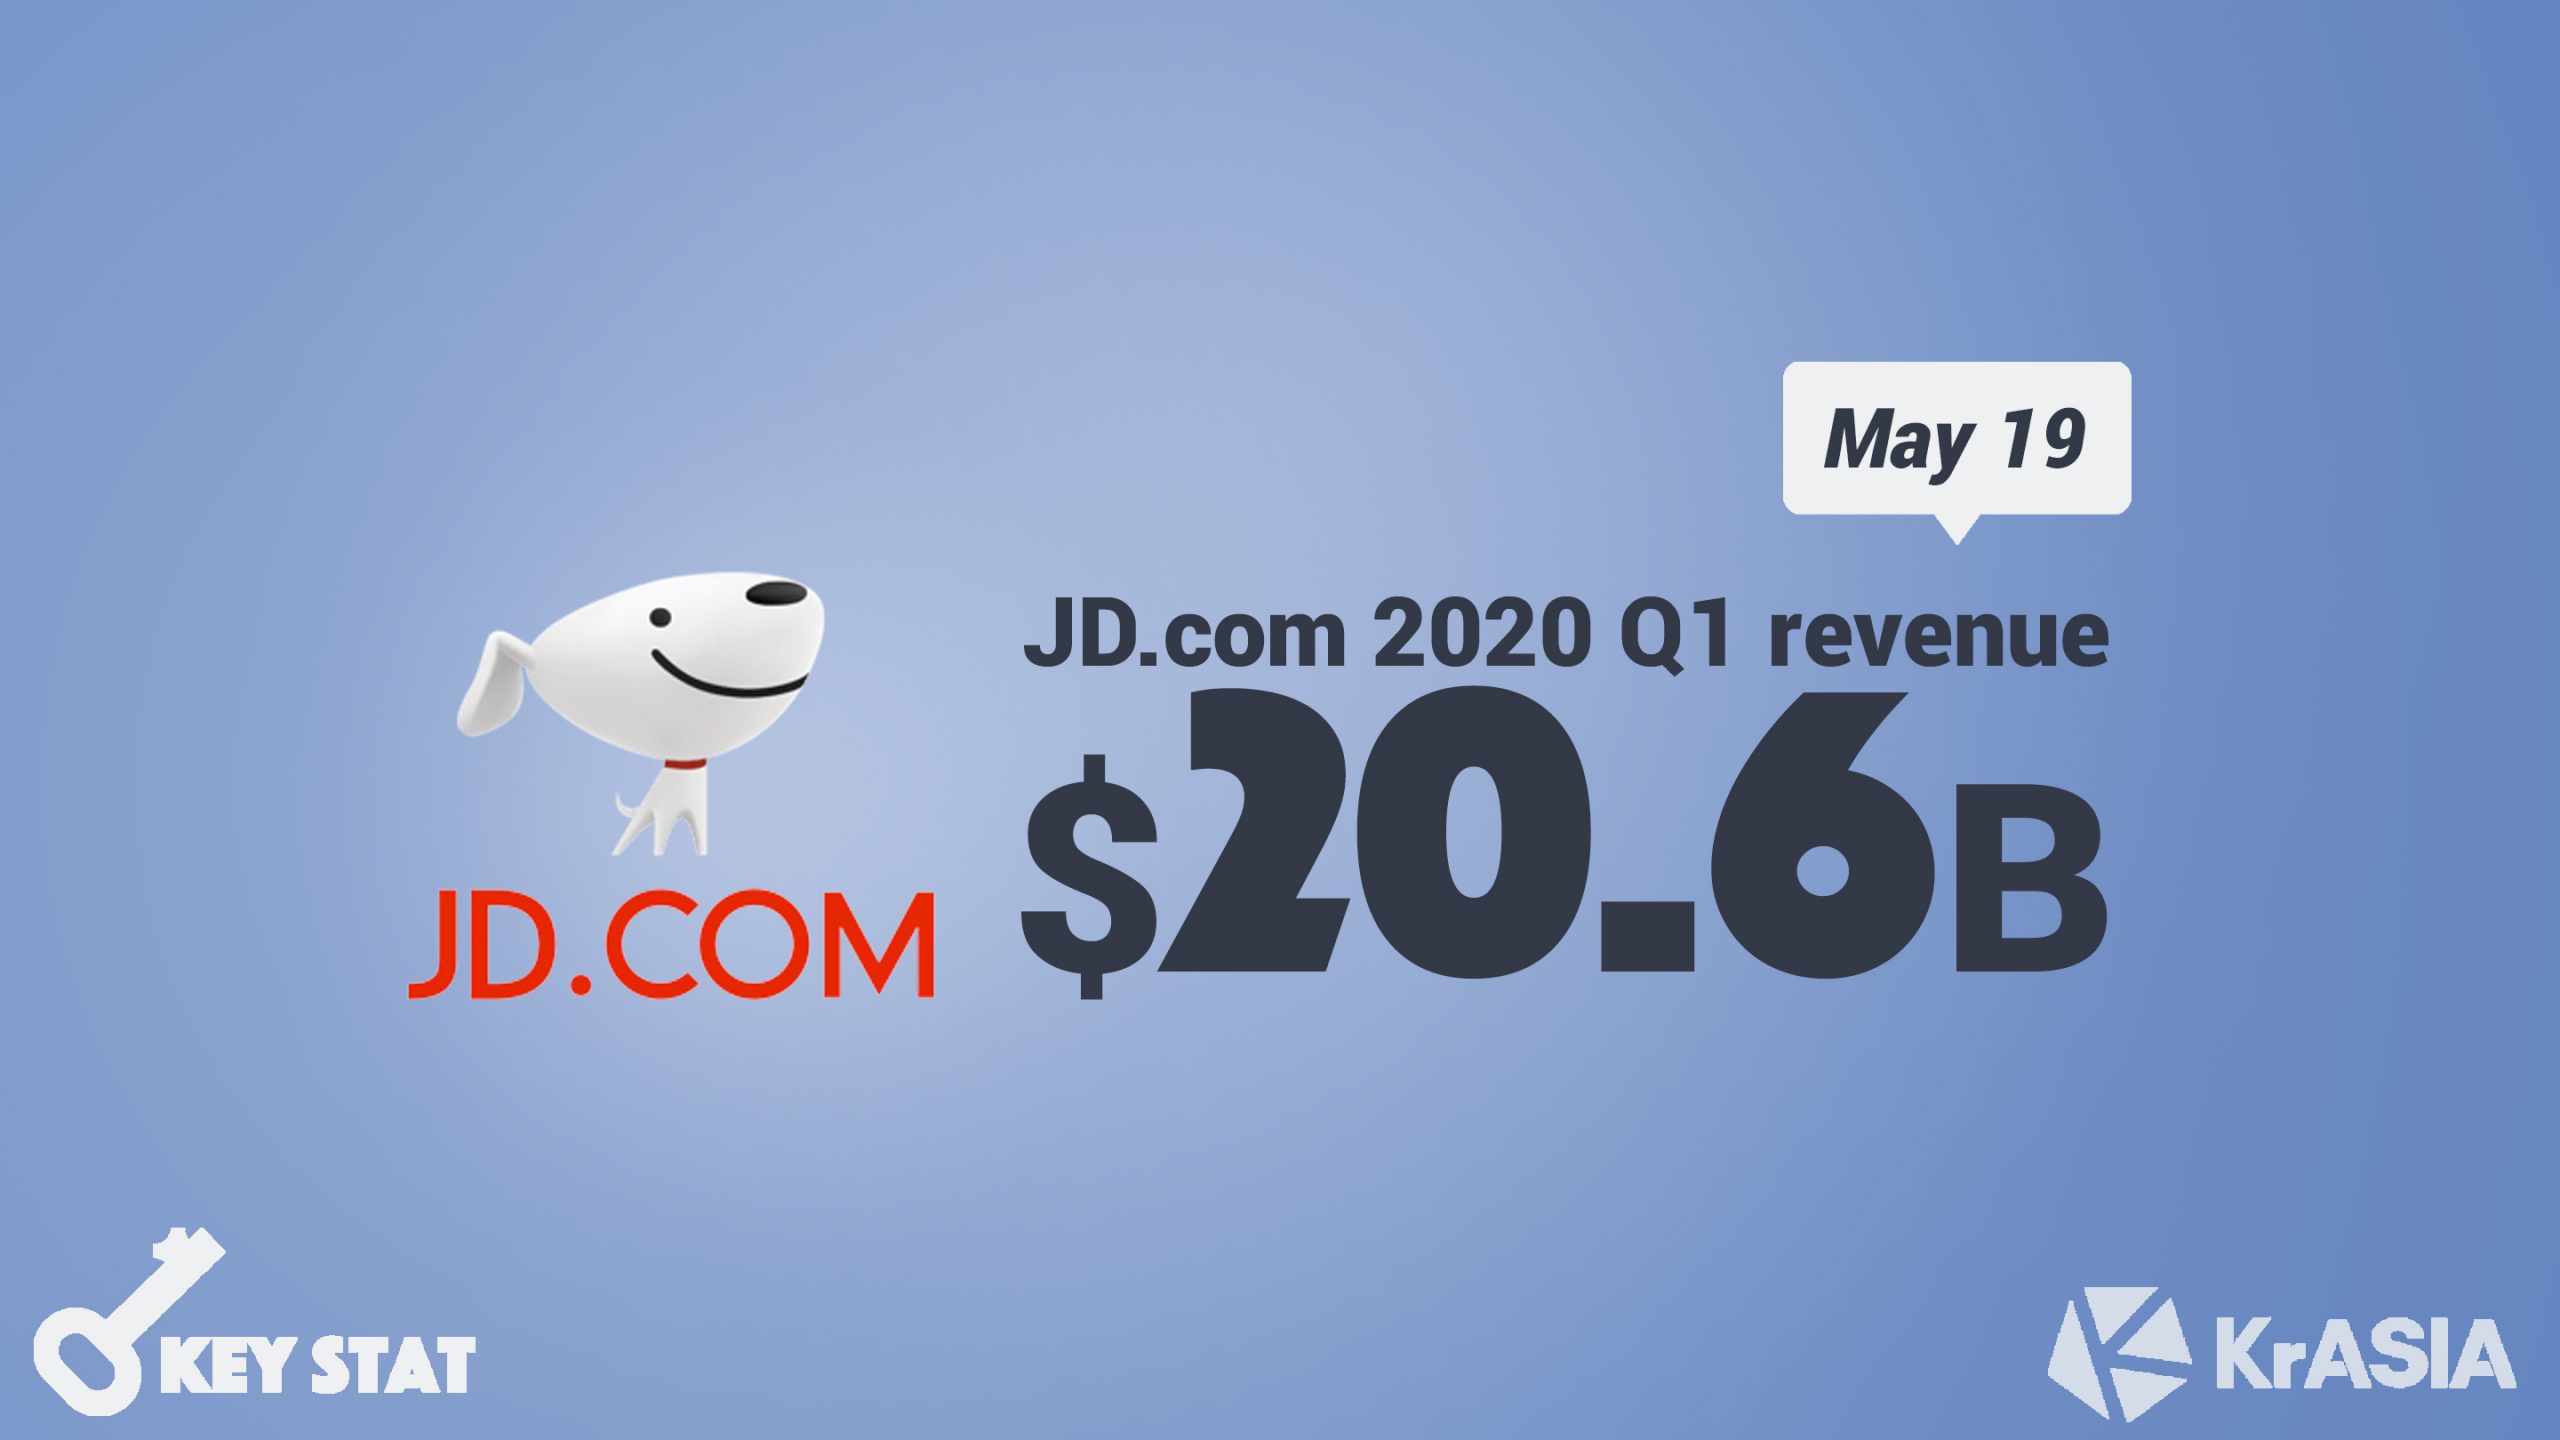 KEY STAT | JD.com books USD 20.6 billion in Q1 revenues, beating analysts’ expectations